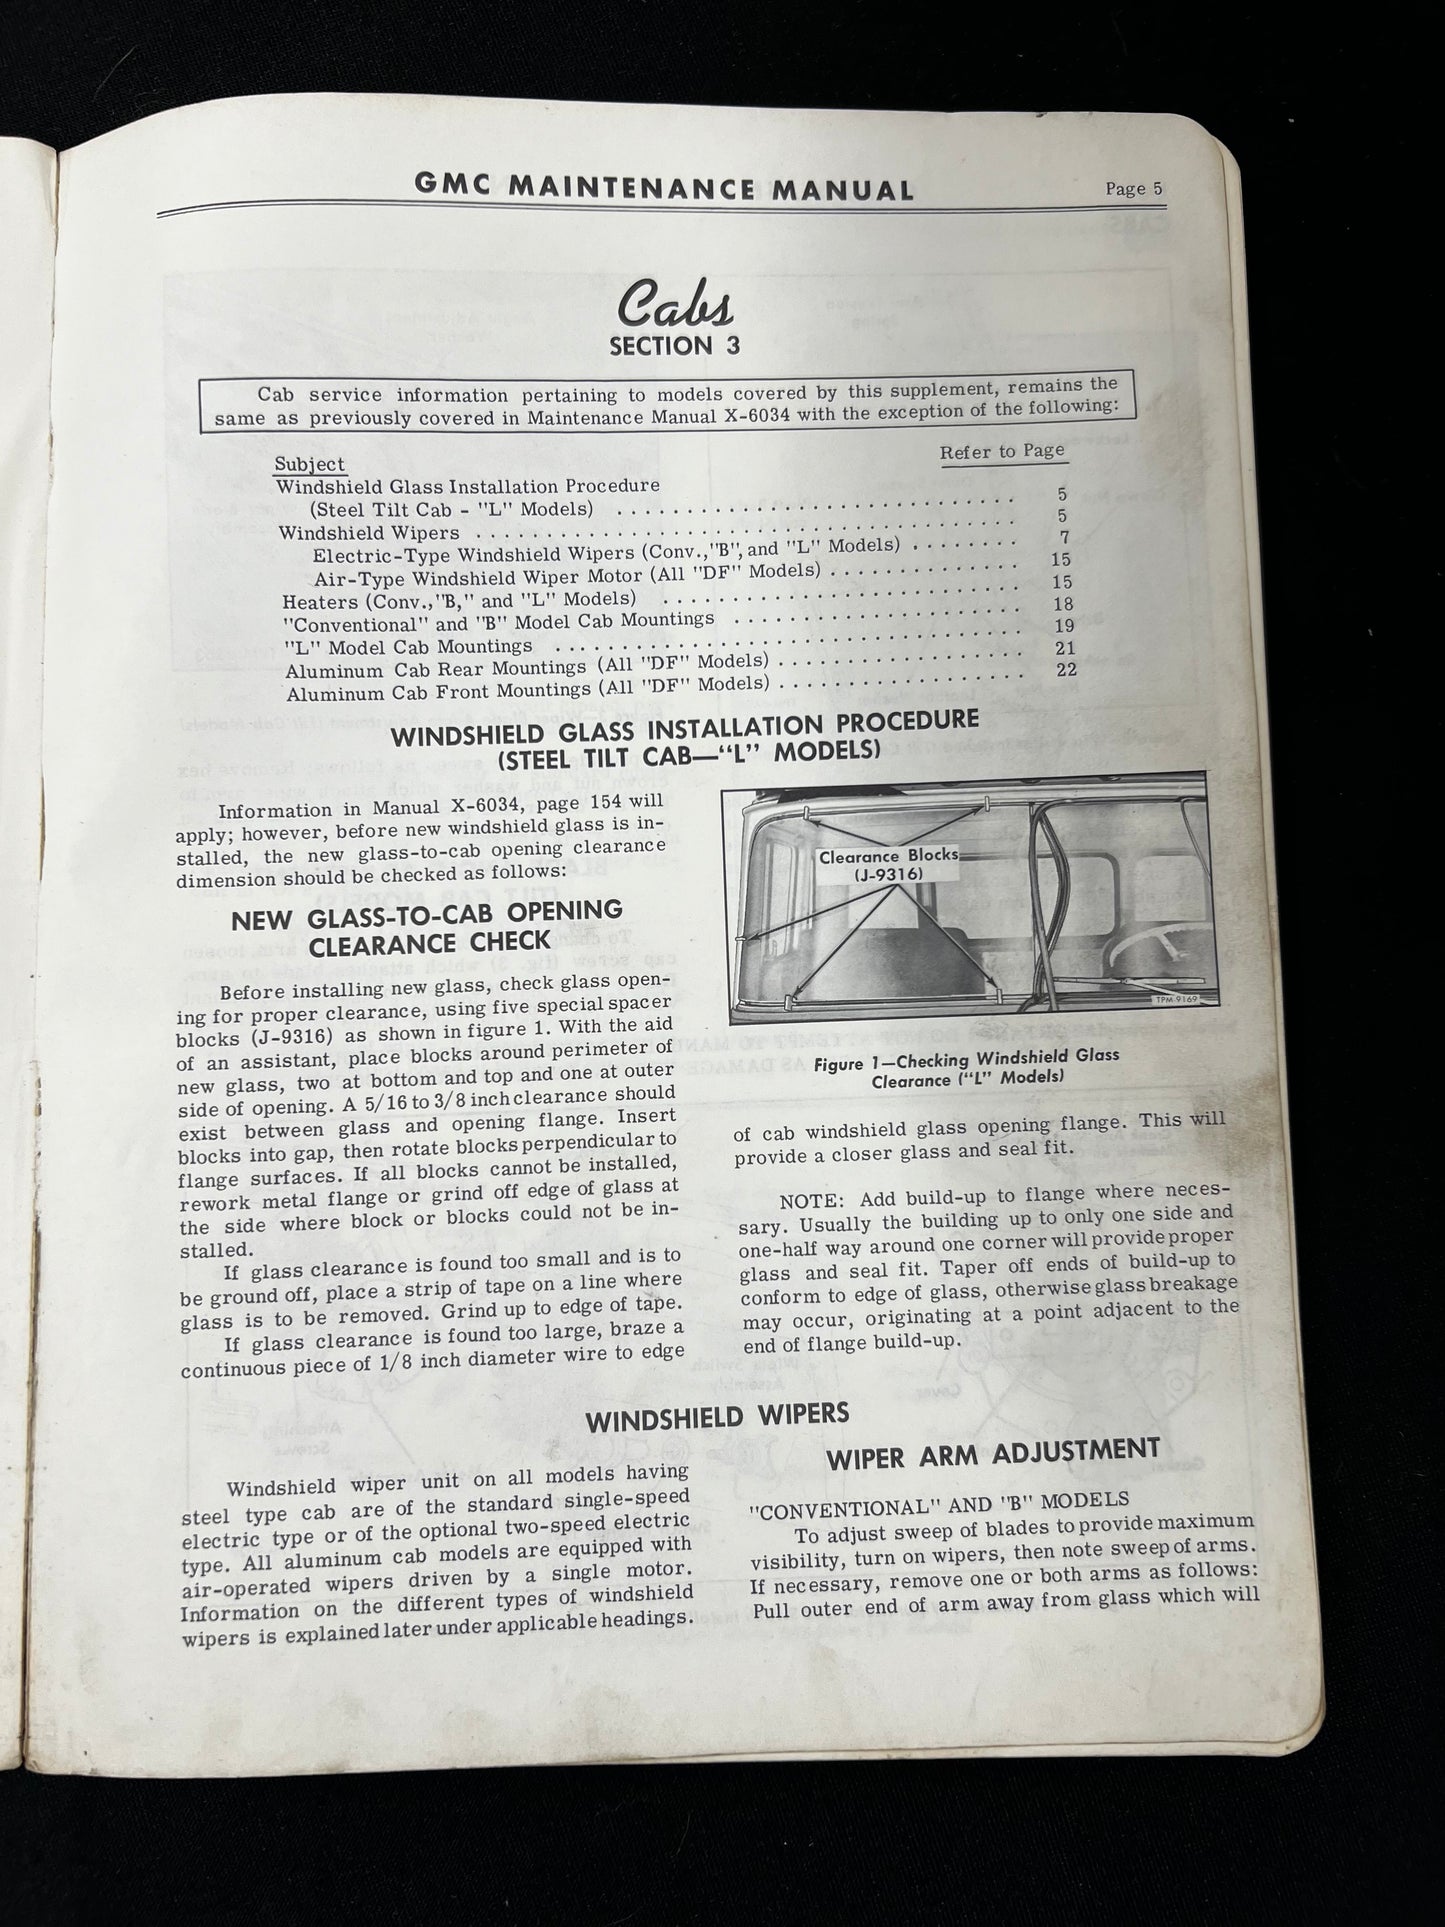 1963 GMC Truck Models 5500-7100 Service Shop Maintenance Manual Supplement